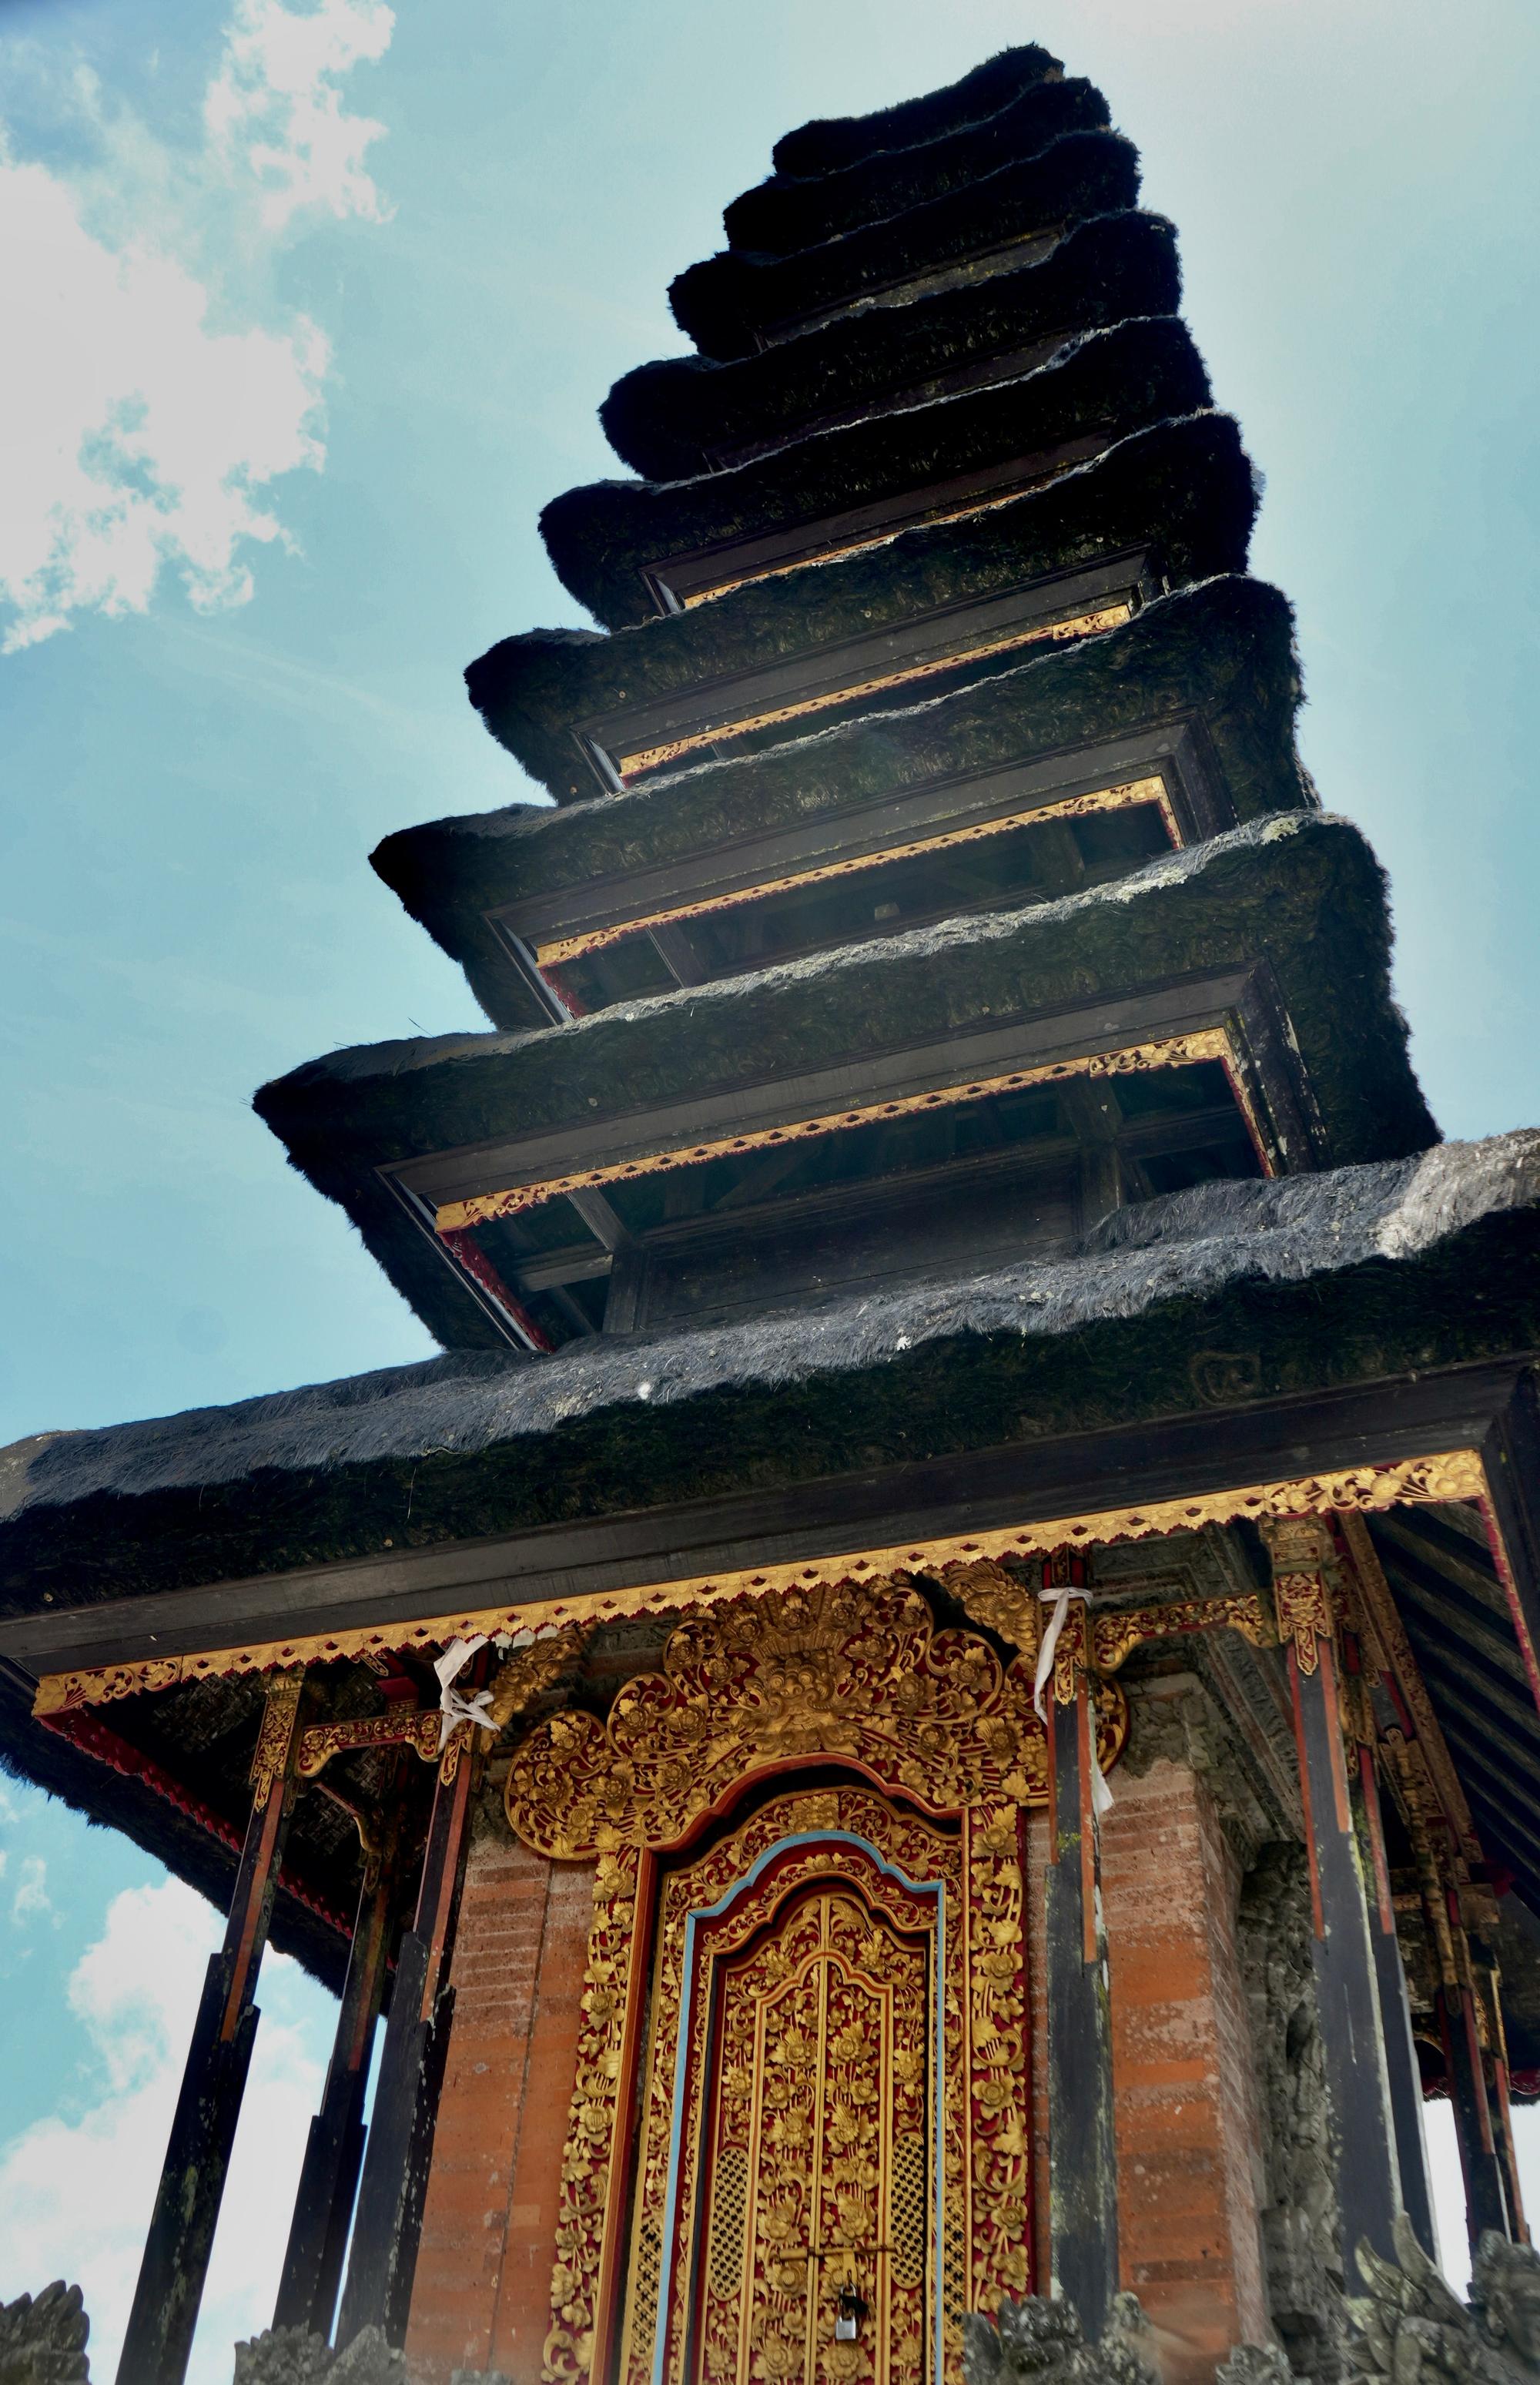 Pagoda viewed from its base